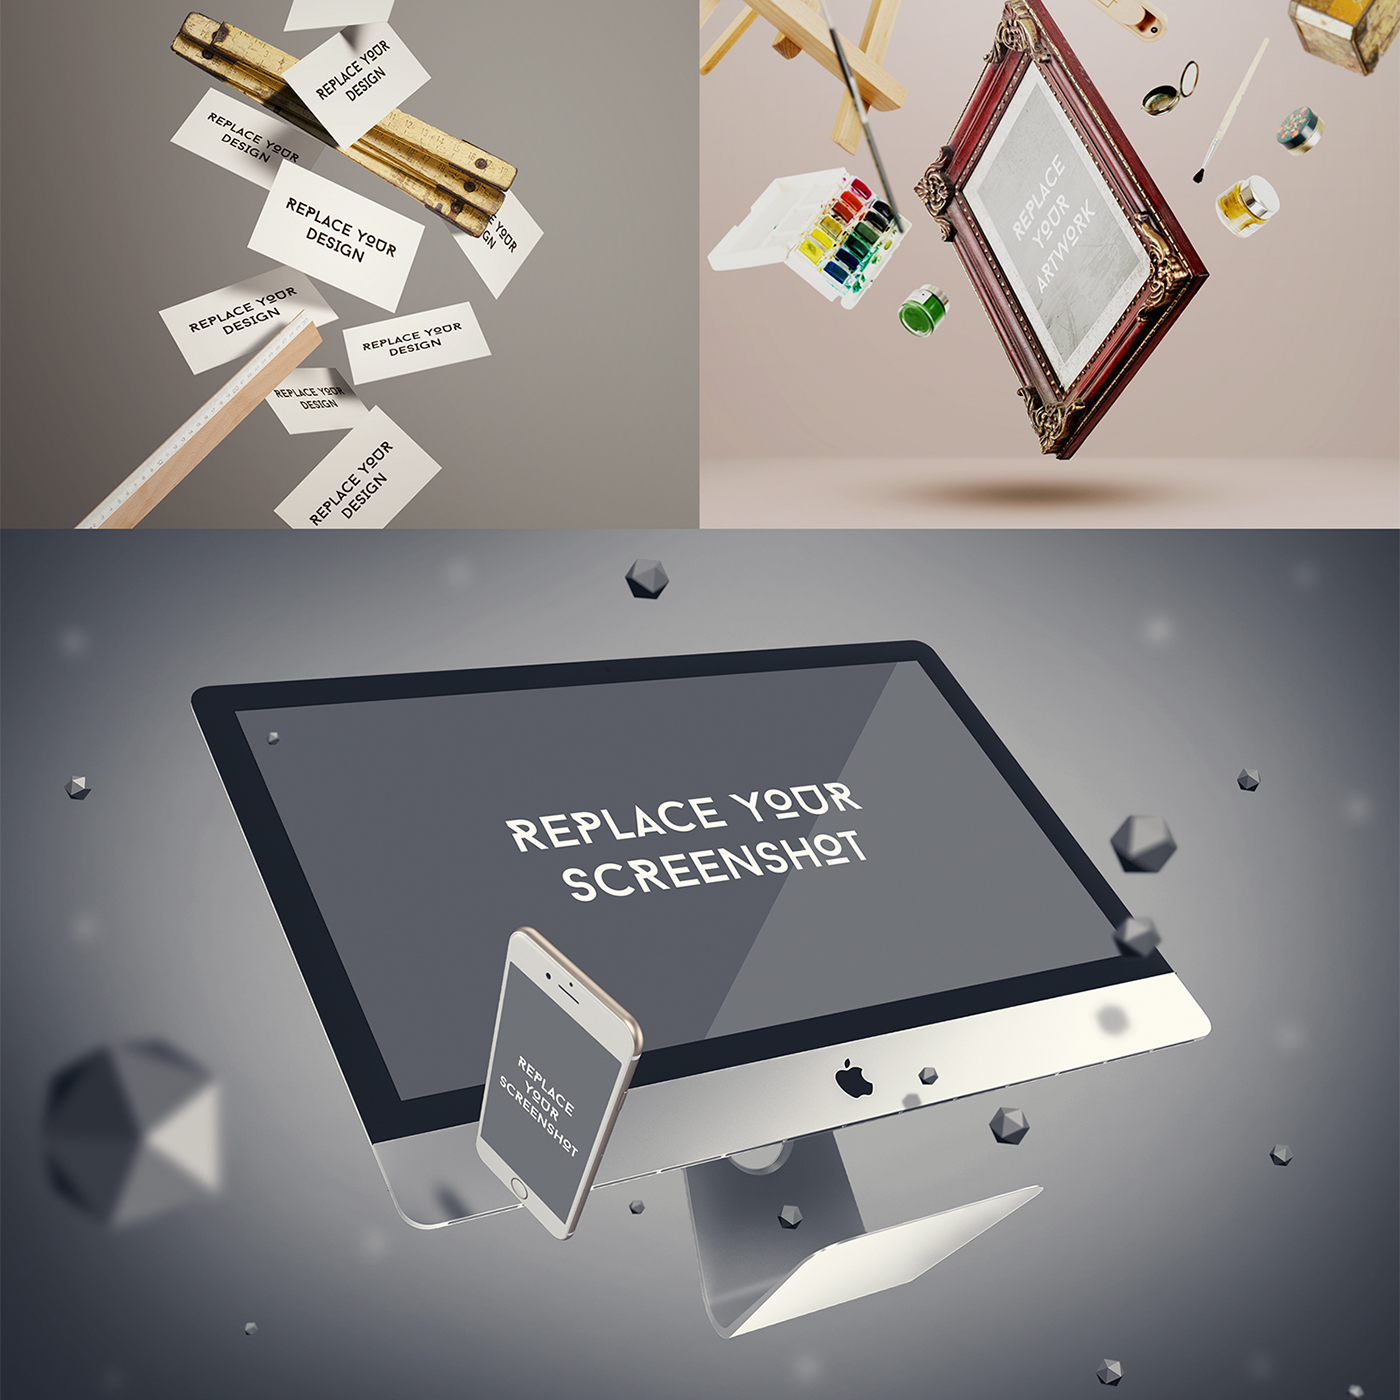 zero gravity Stage Generator Mockup showcase presentation mockupzone Flying print screen frame